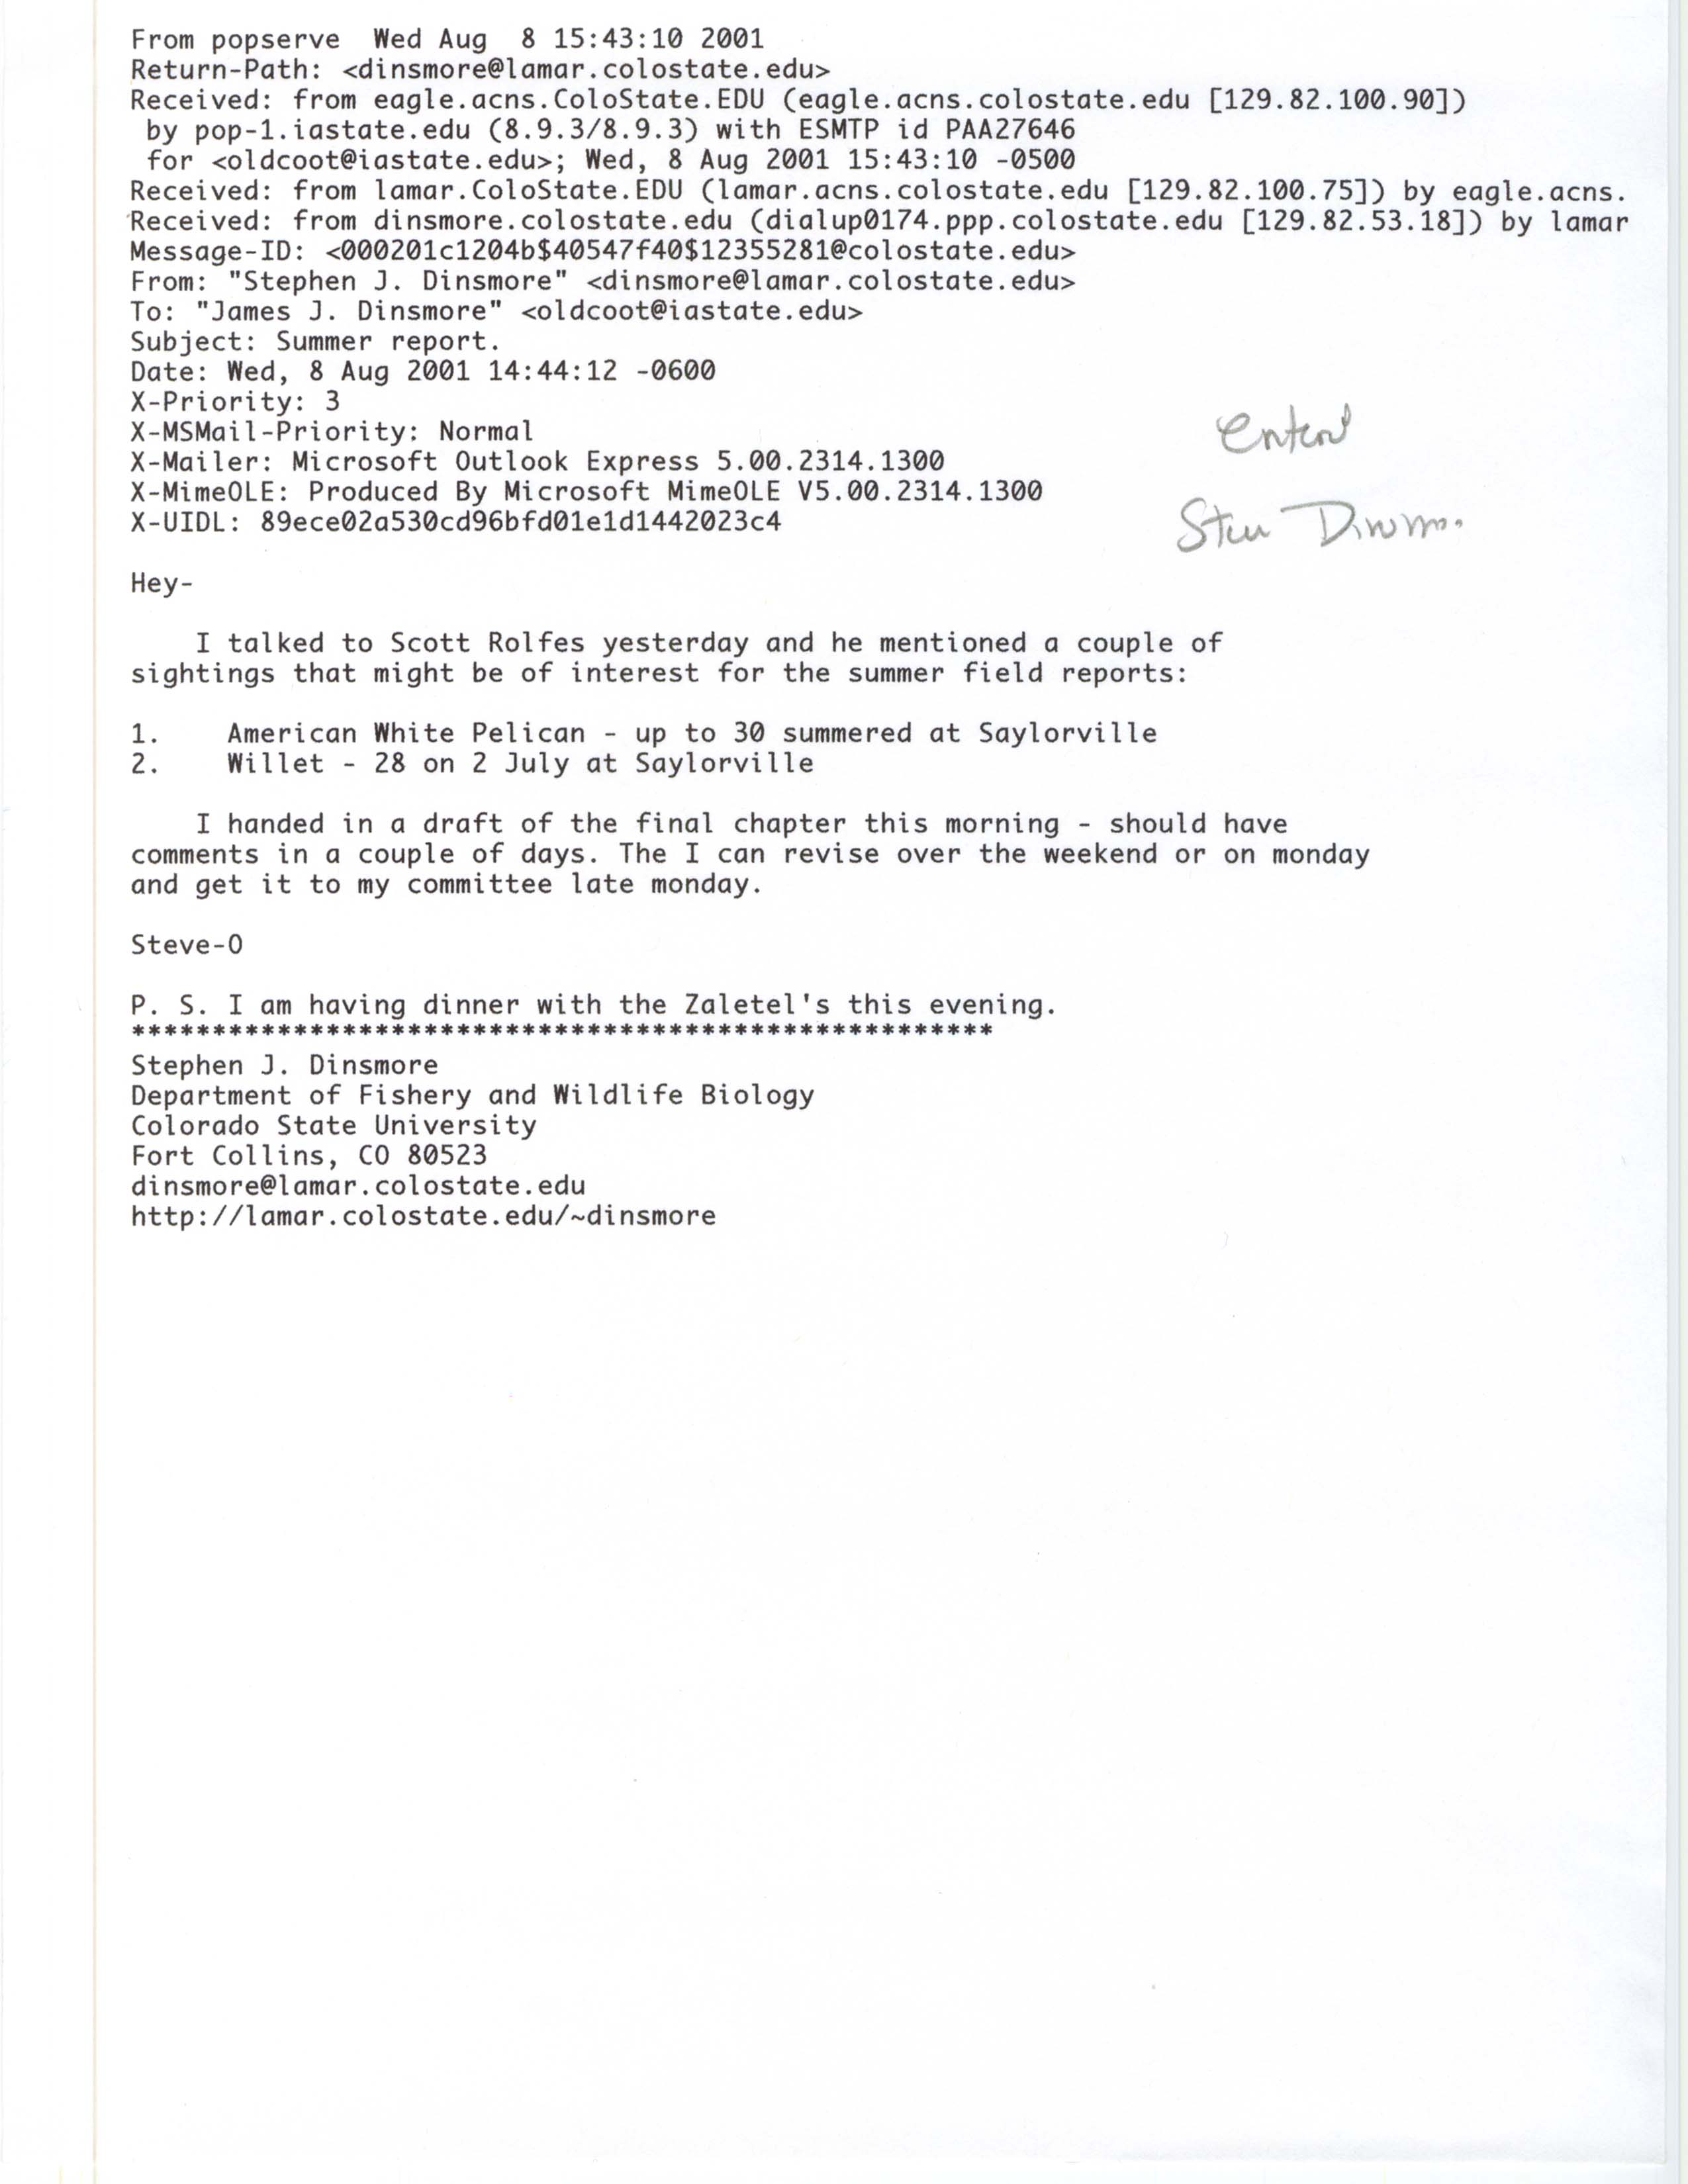 Stephen J. Dinsmore email to James J. Dinsmore regarding bird sightings, August 8, 2001